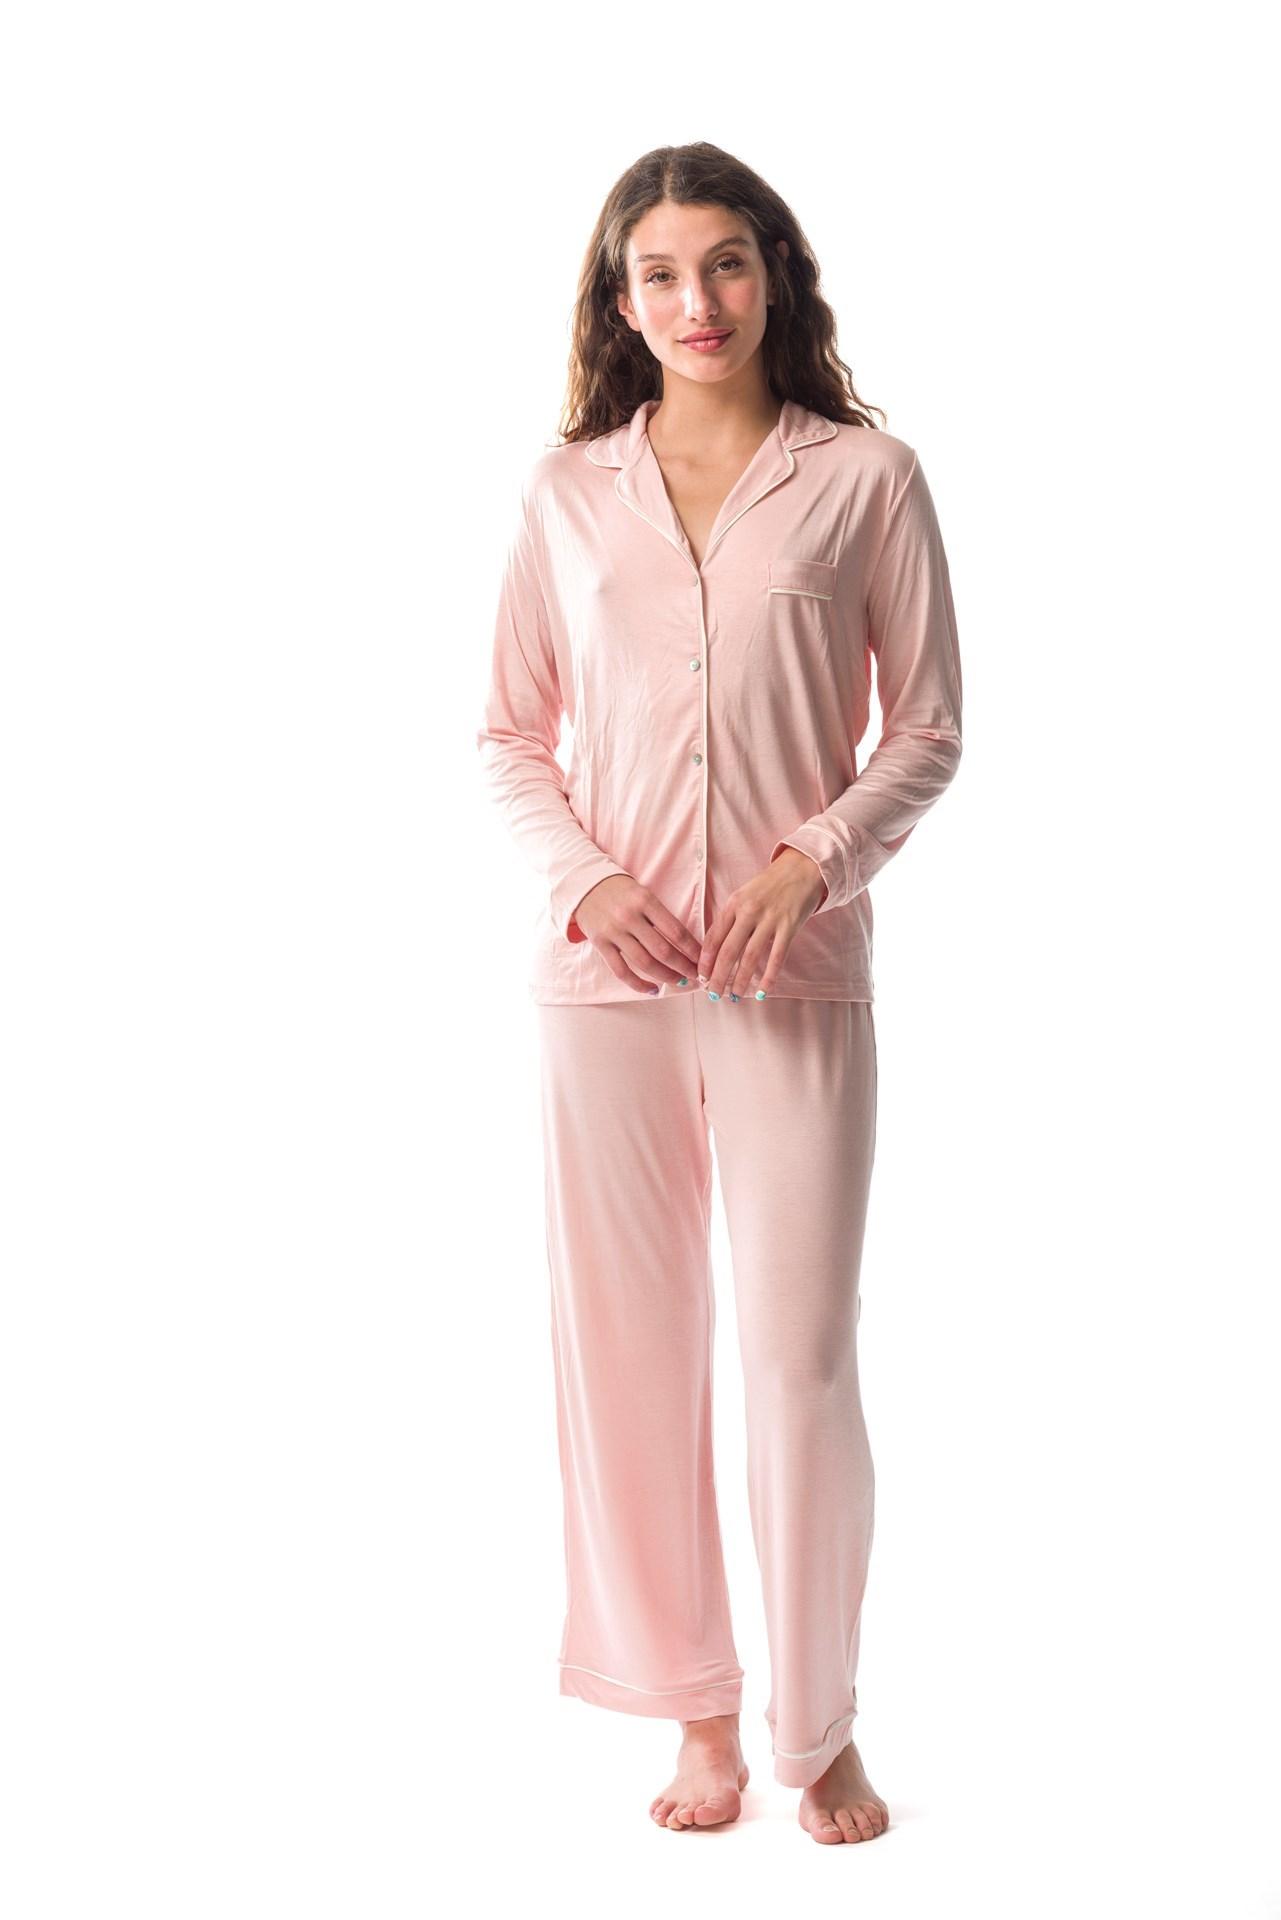 Donatella - Pijama Camisero Largo rosado pastel l